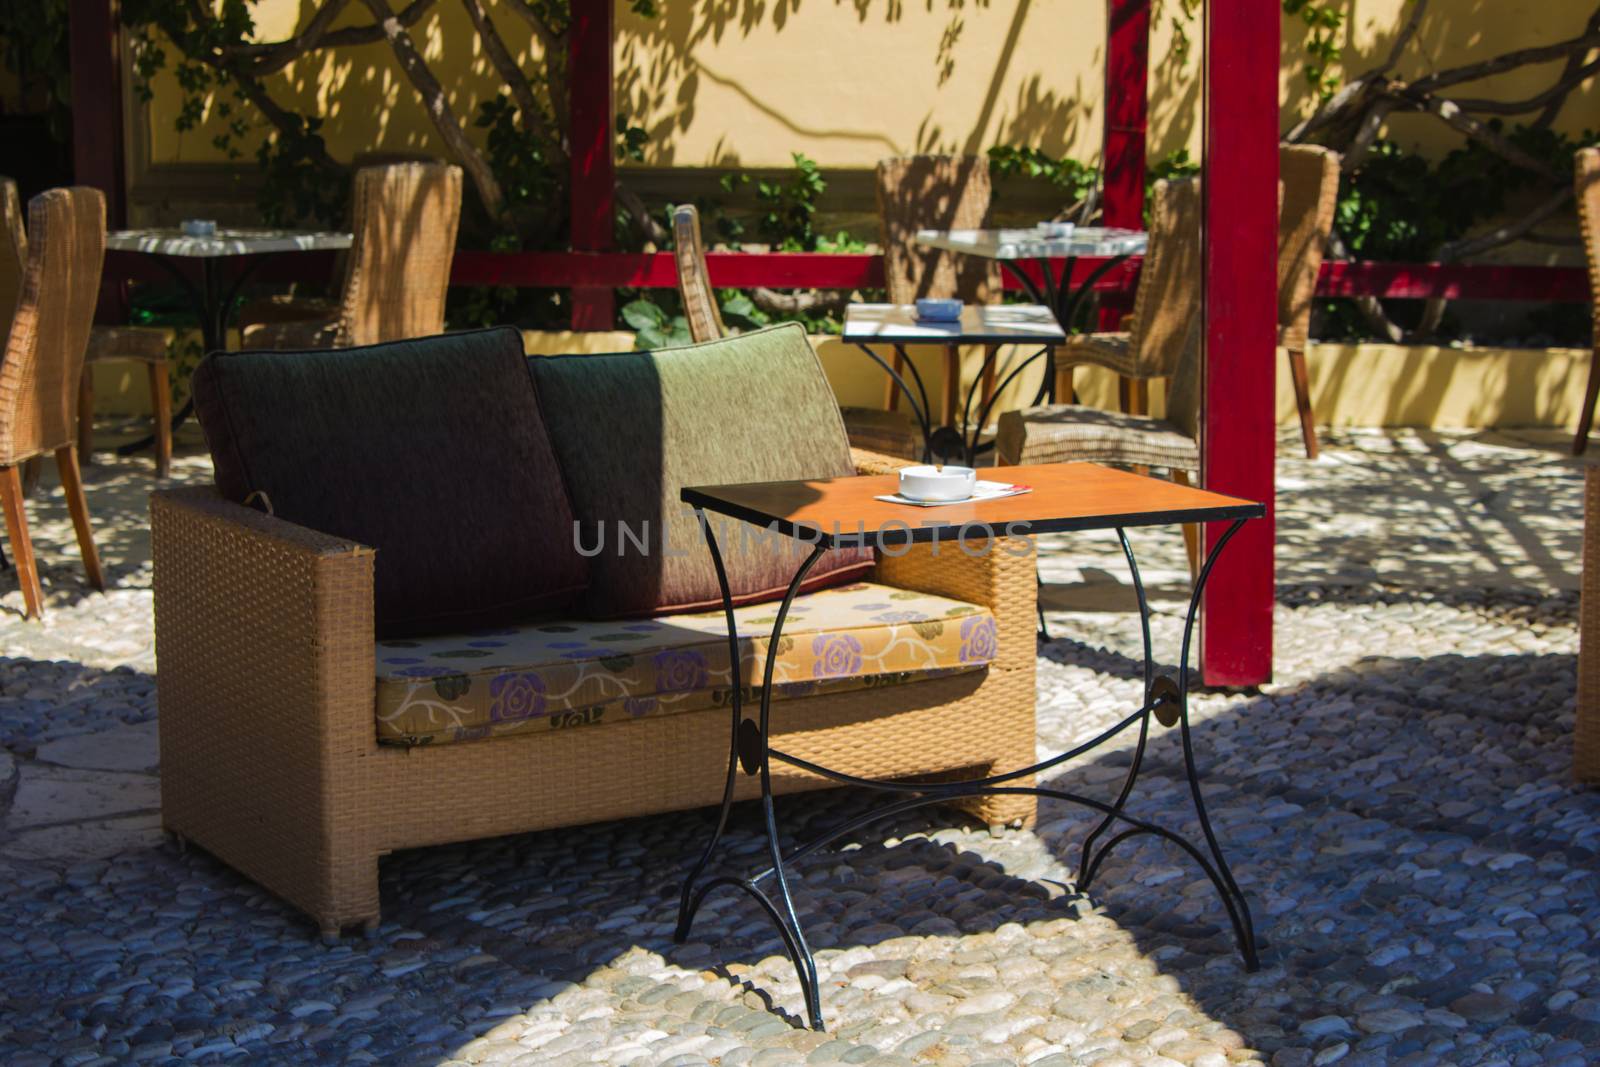 Sunny furniture in an outdoor restaurant/bar